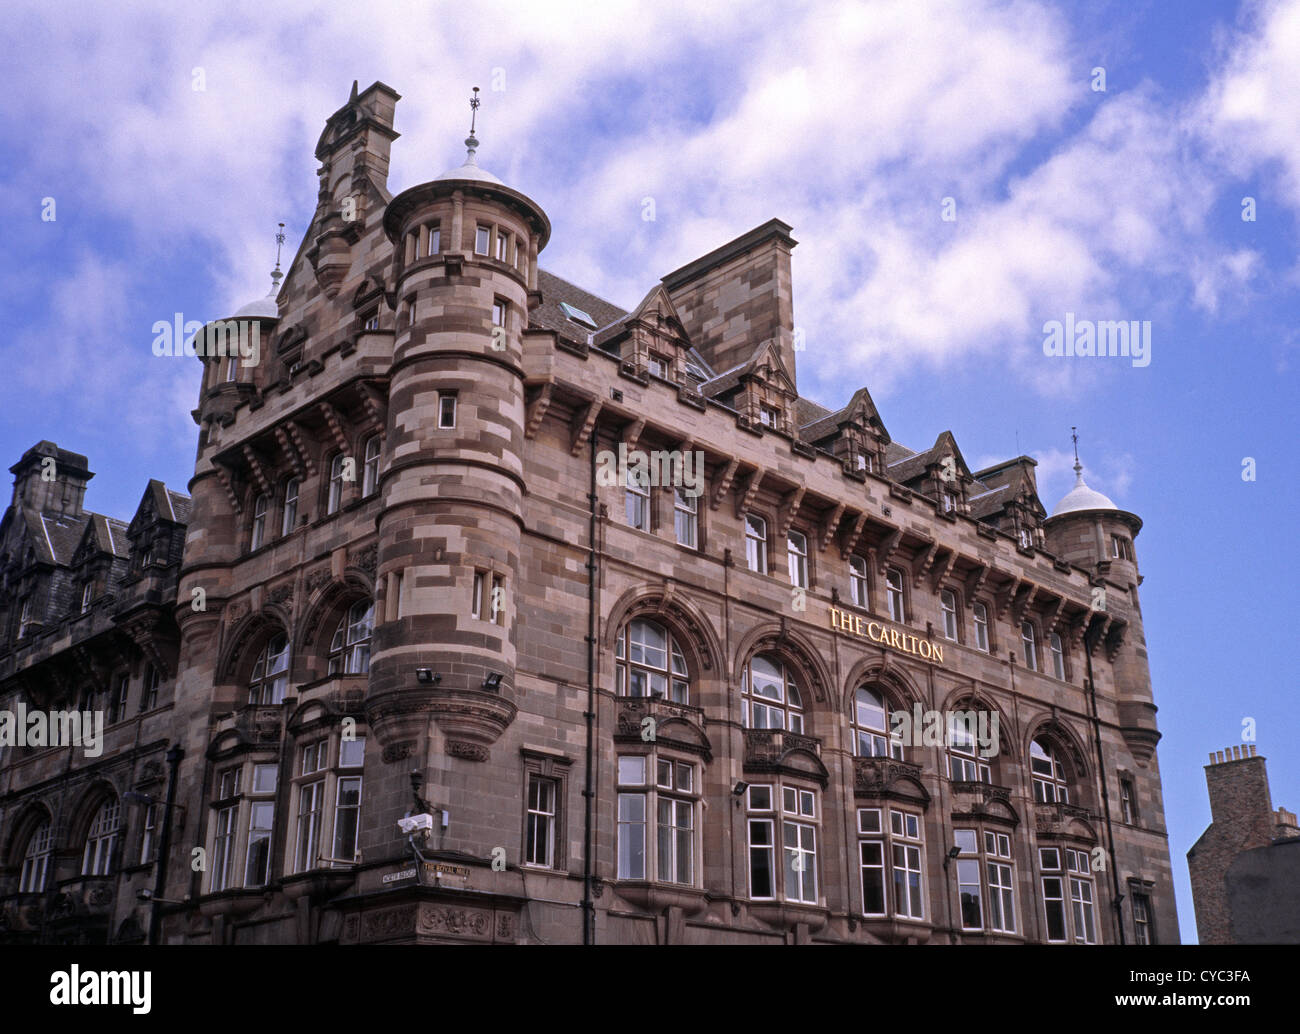 Le Carlton Hotel, North Bridge, Edinburgh, Ecosse, Royaume-Uni Banque D'Images